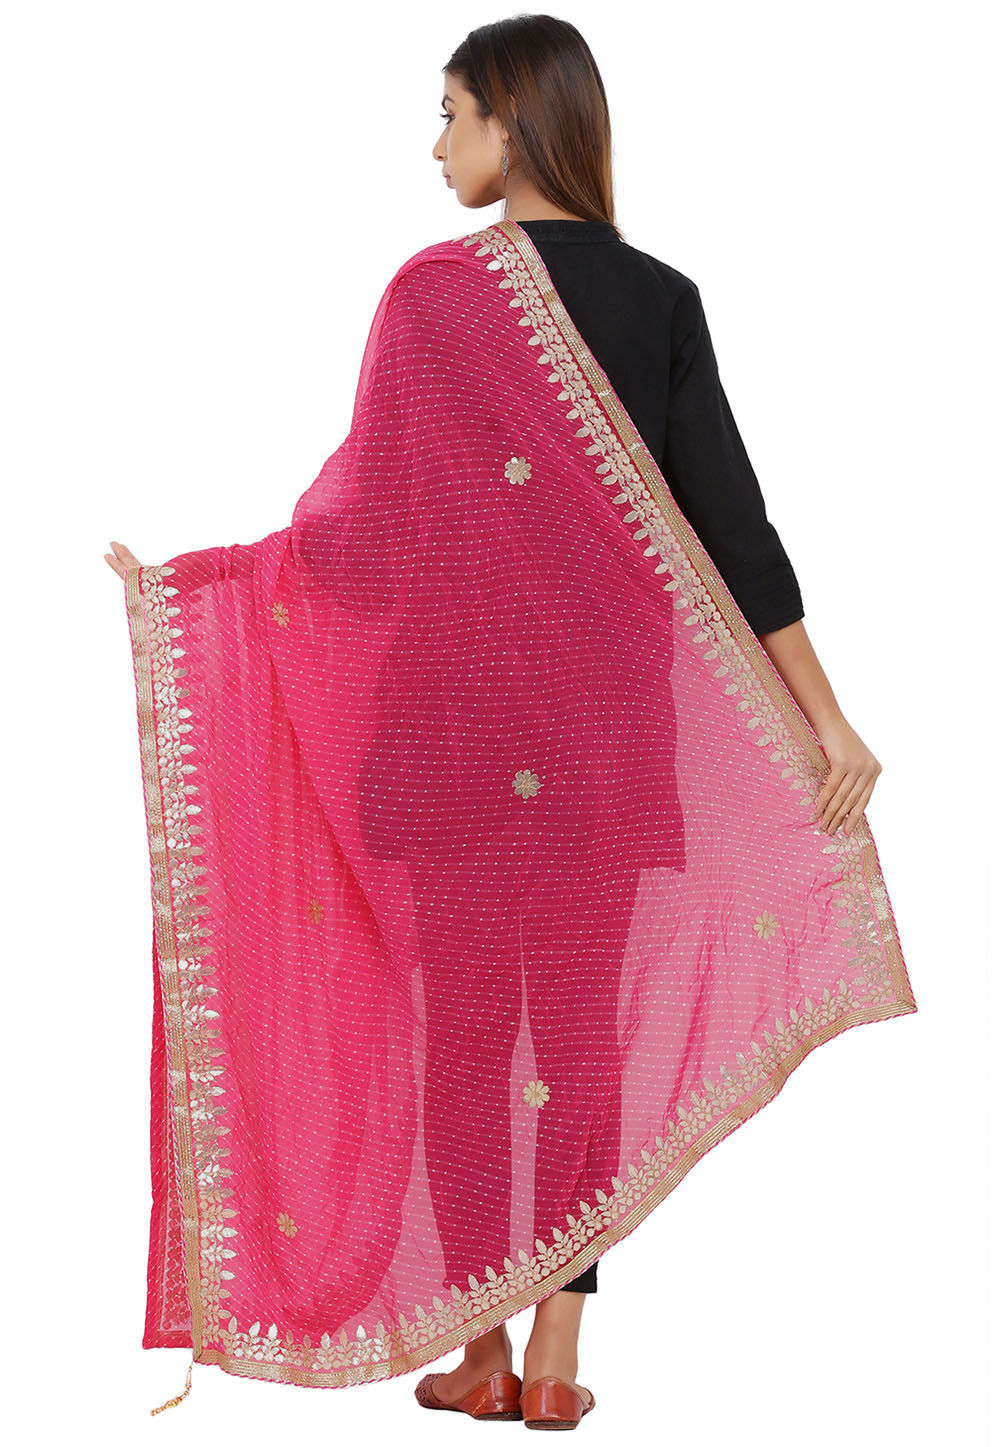 Leheriya Chiffon Dupatta in Pink : TRJ158